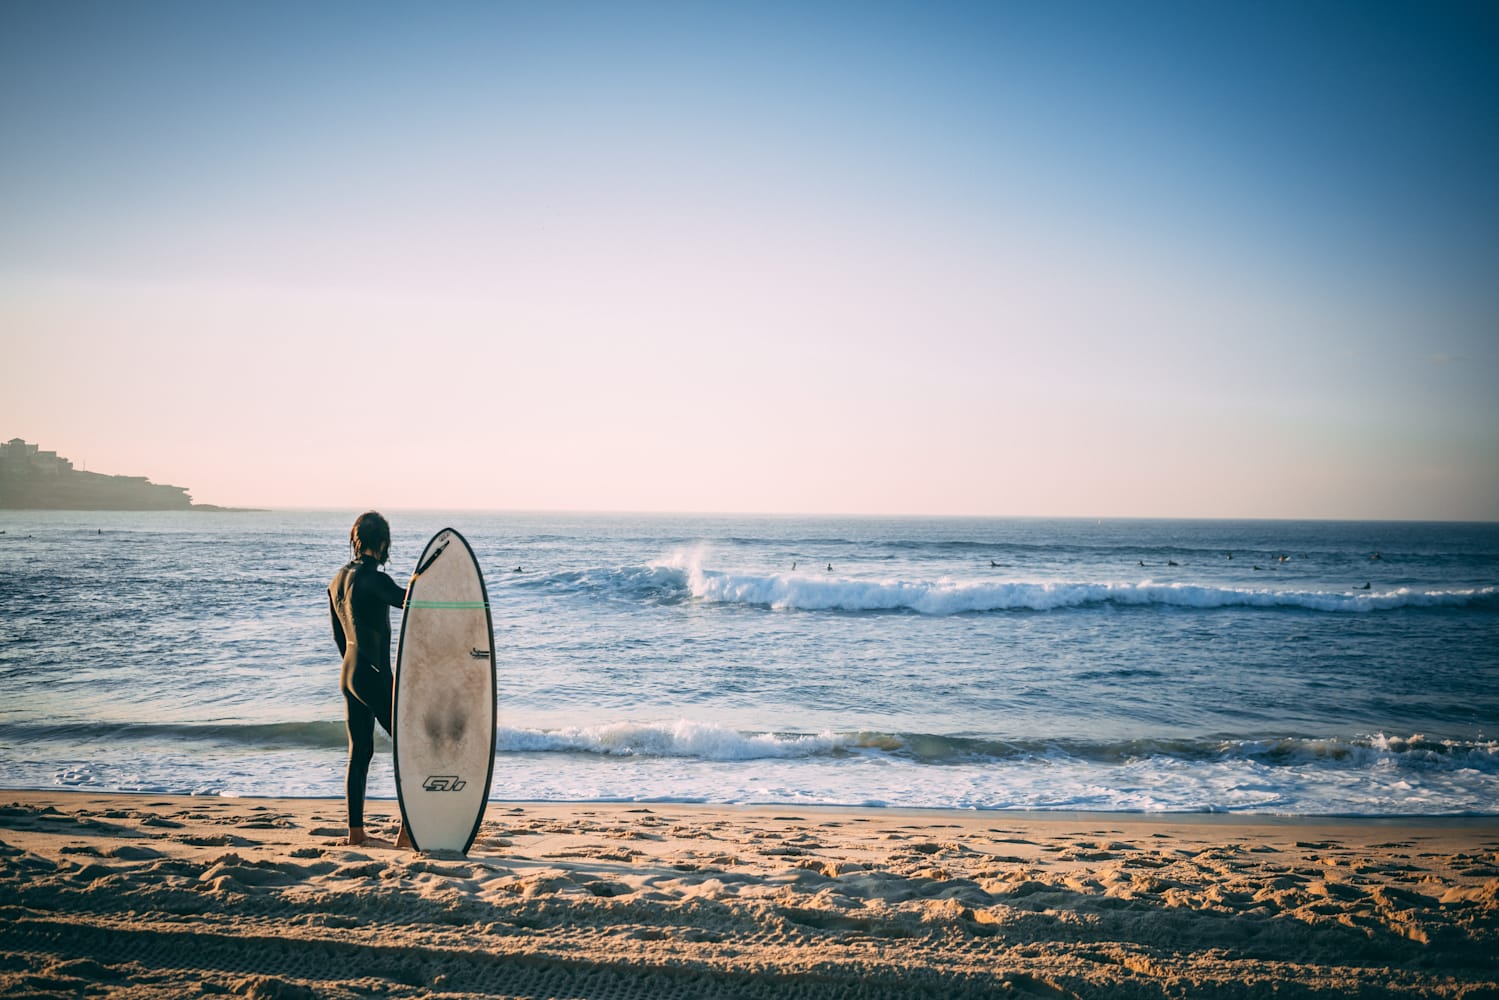 Best surf spots Australia: Top waves for beginners